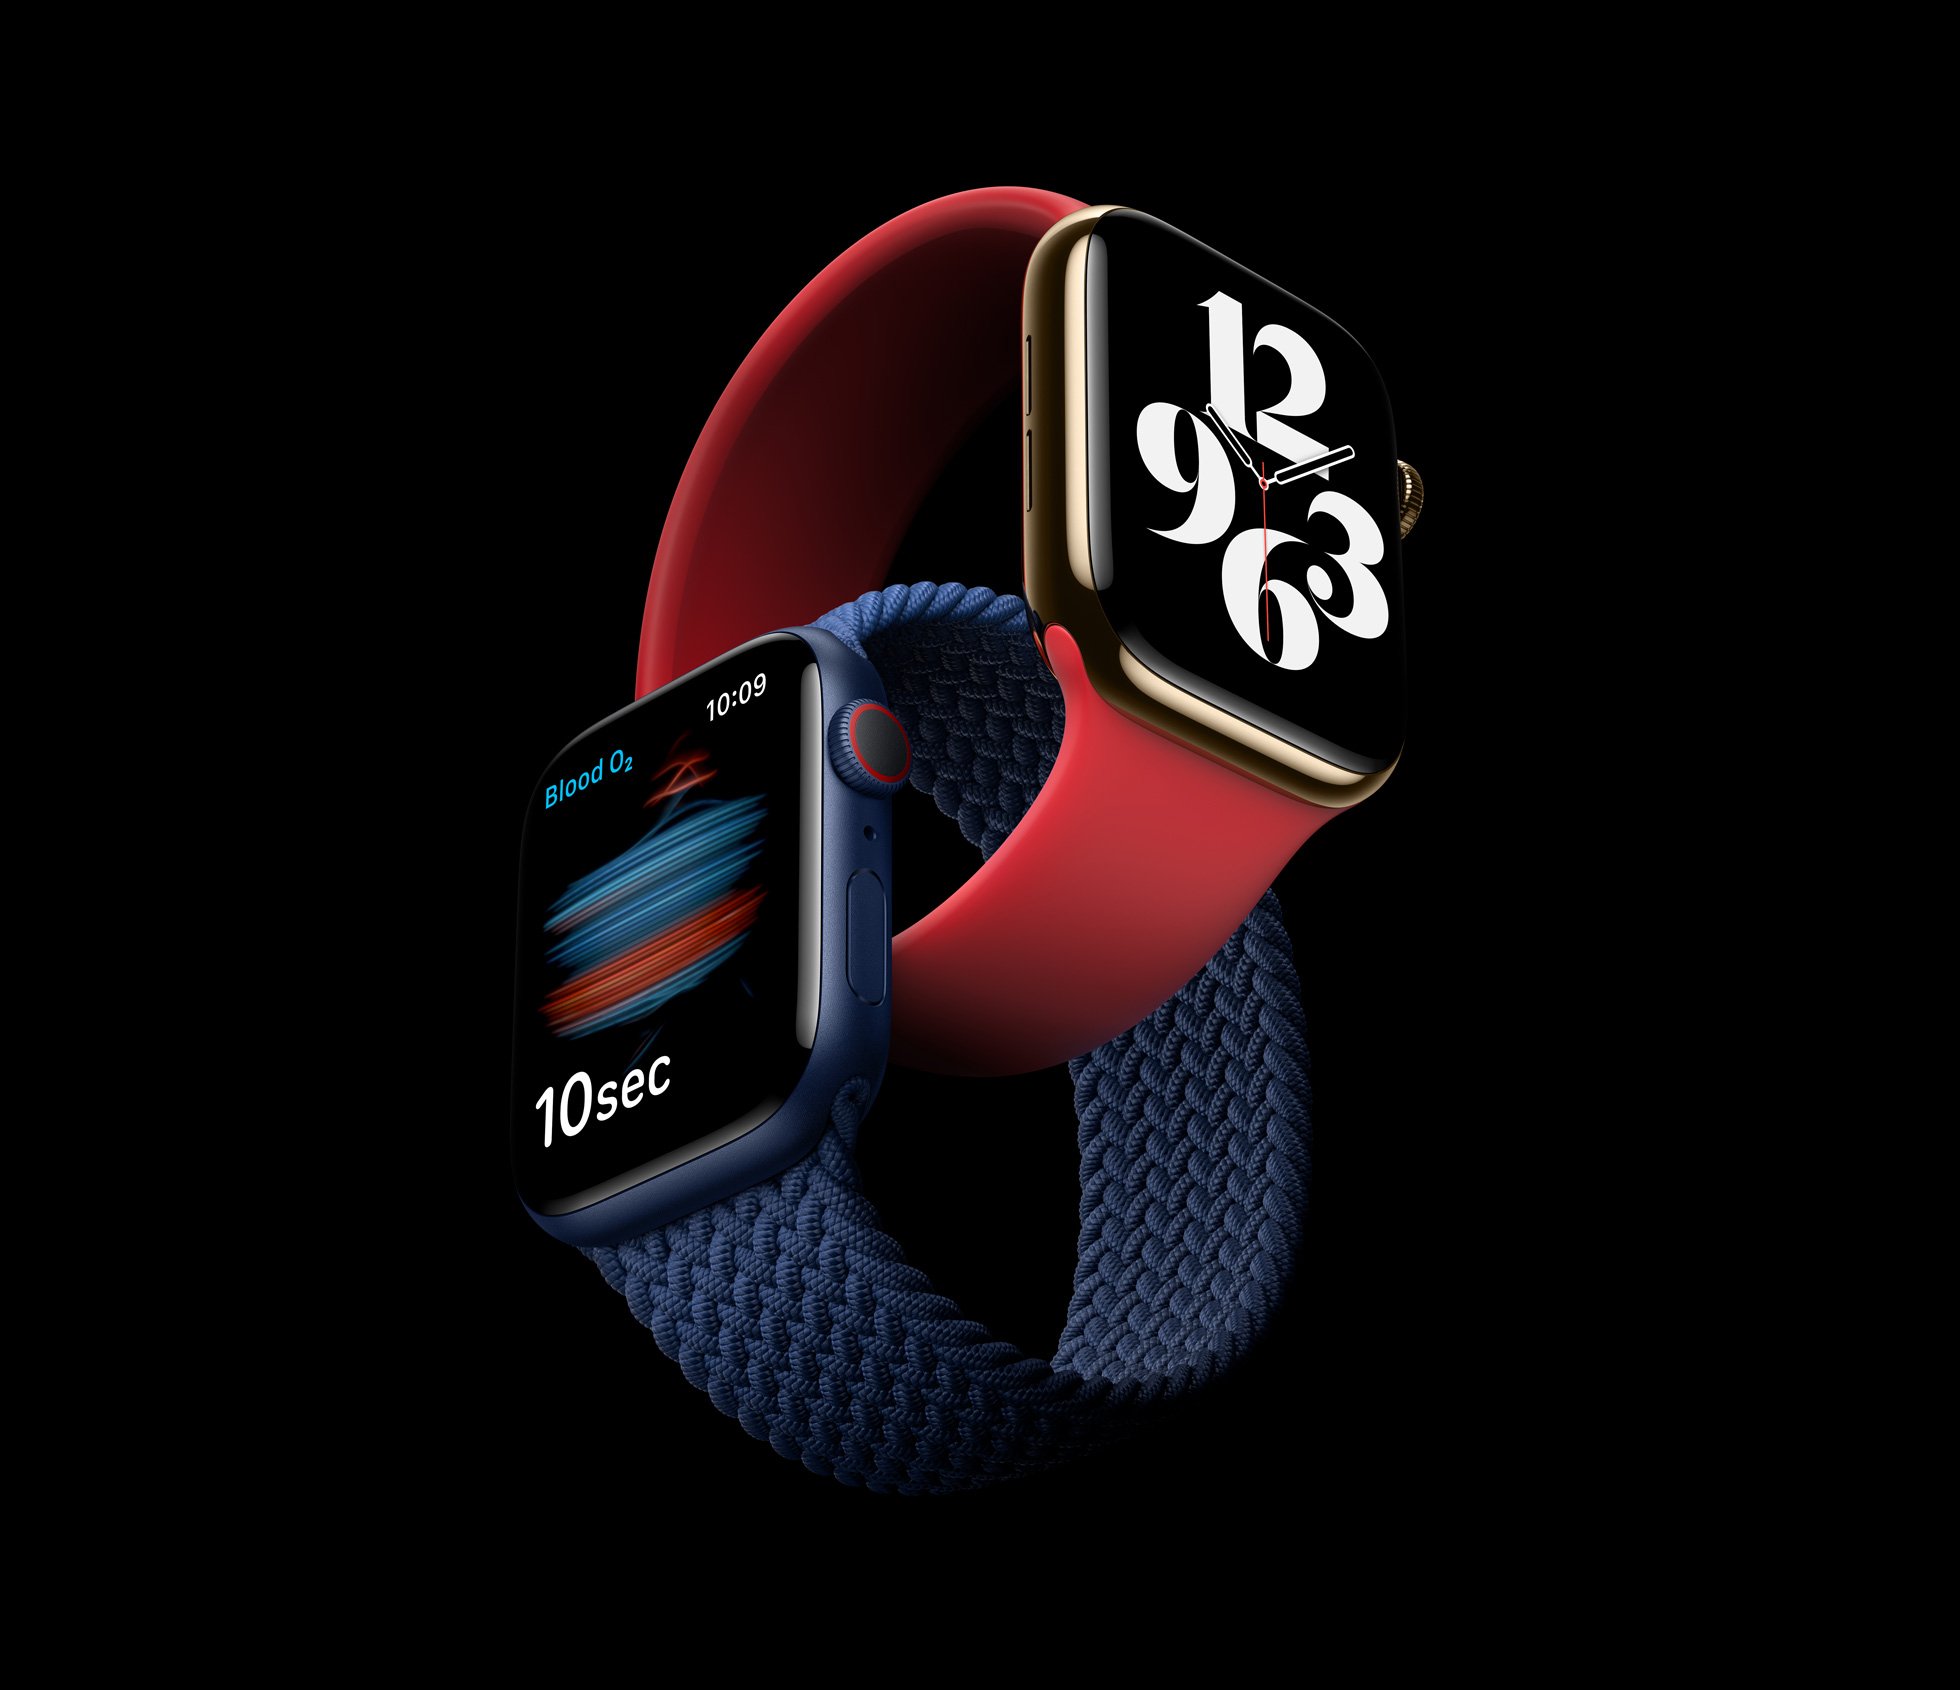 Apple Watch Blood Pressure